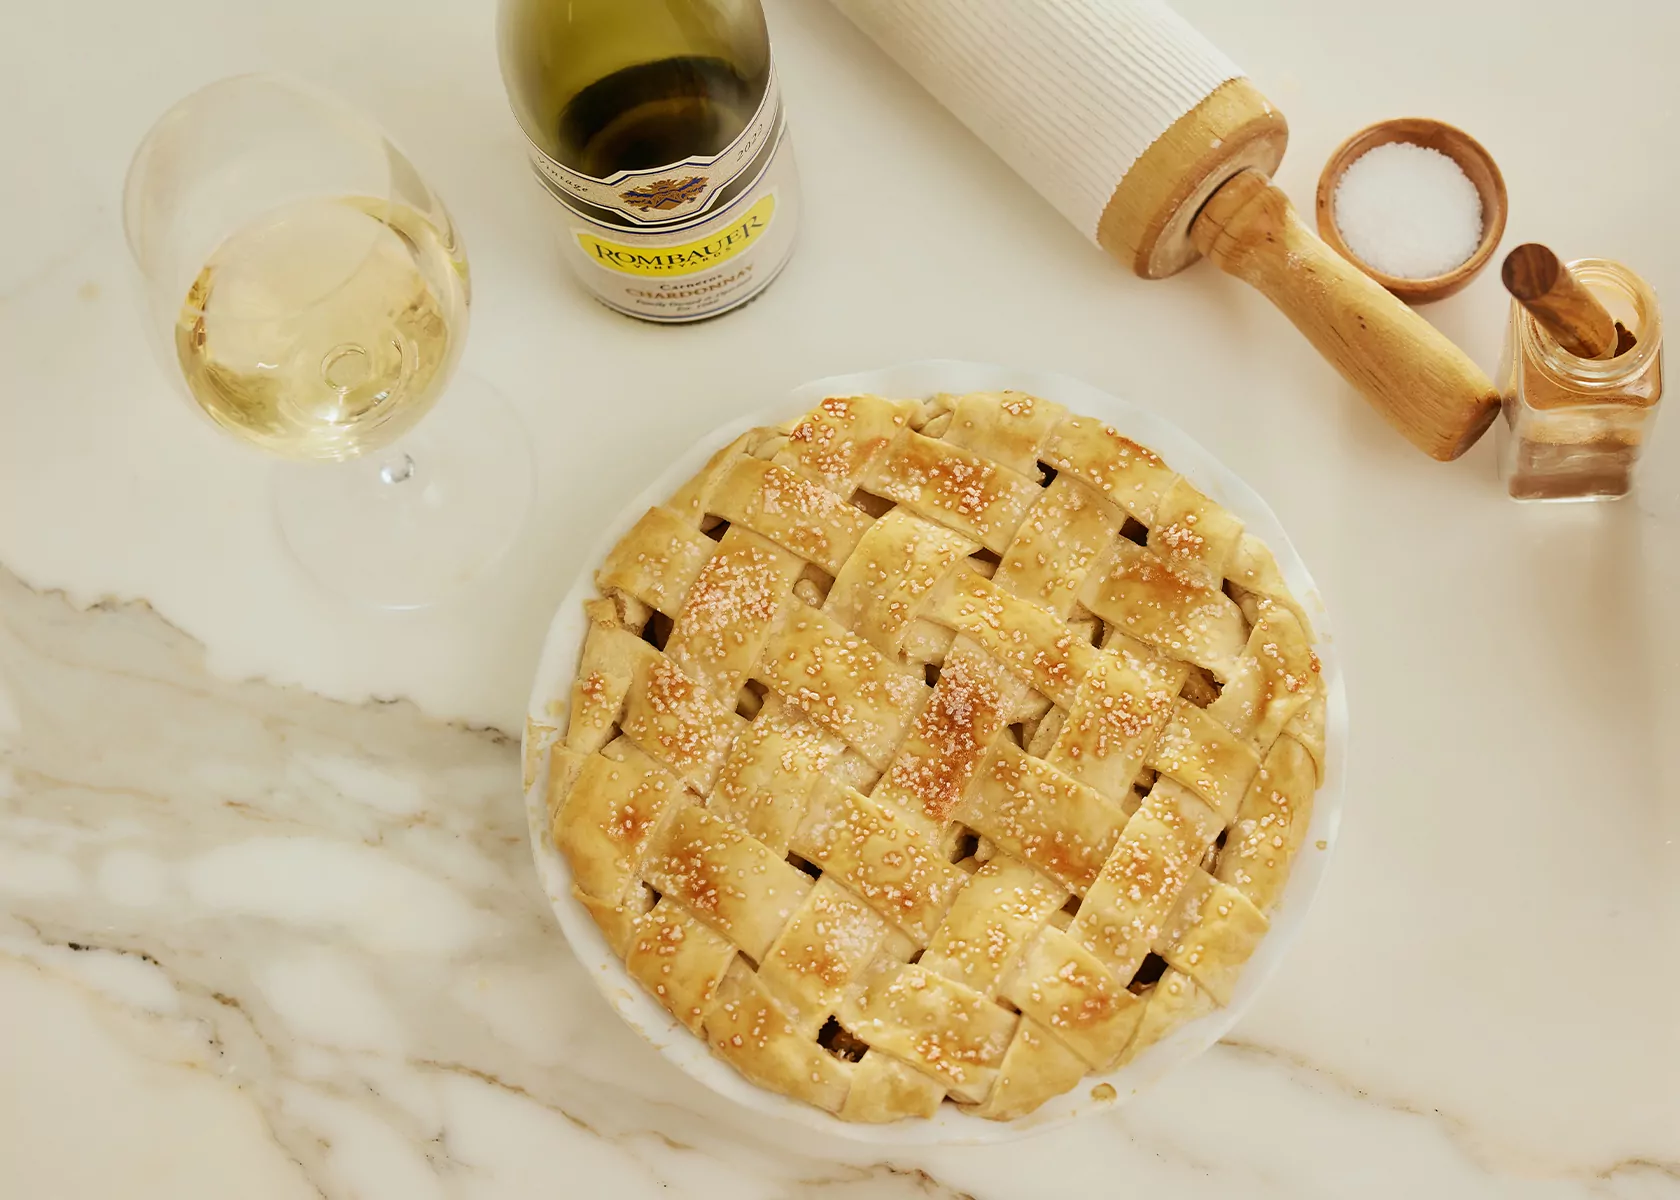 Apple pie and chardonnay